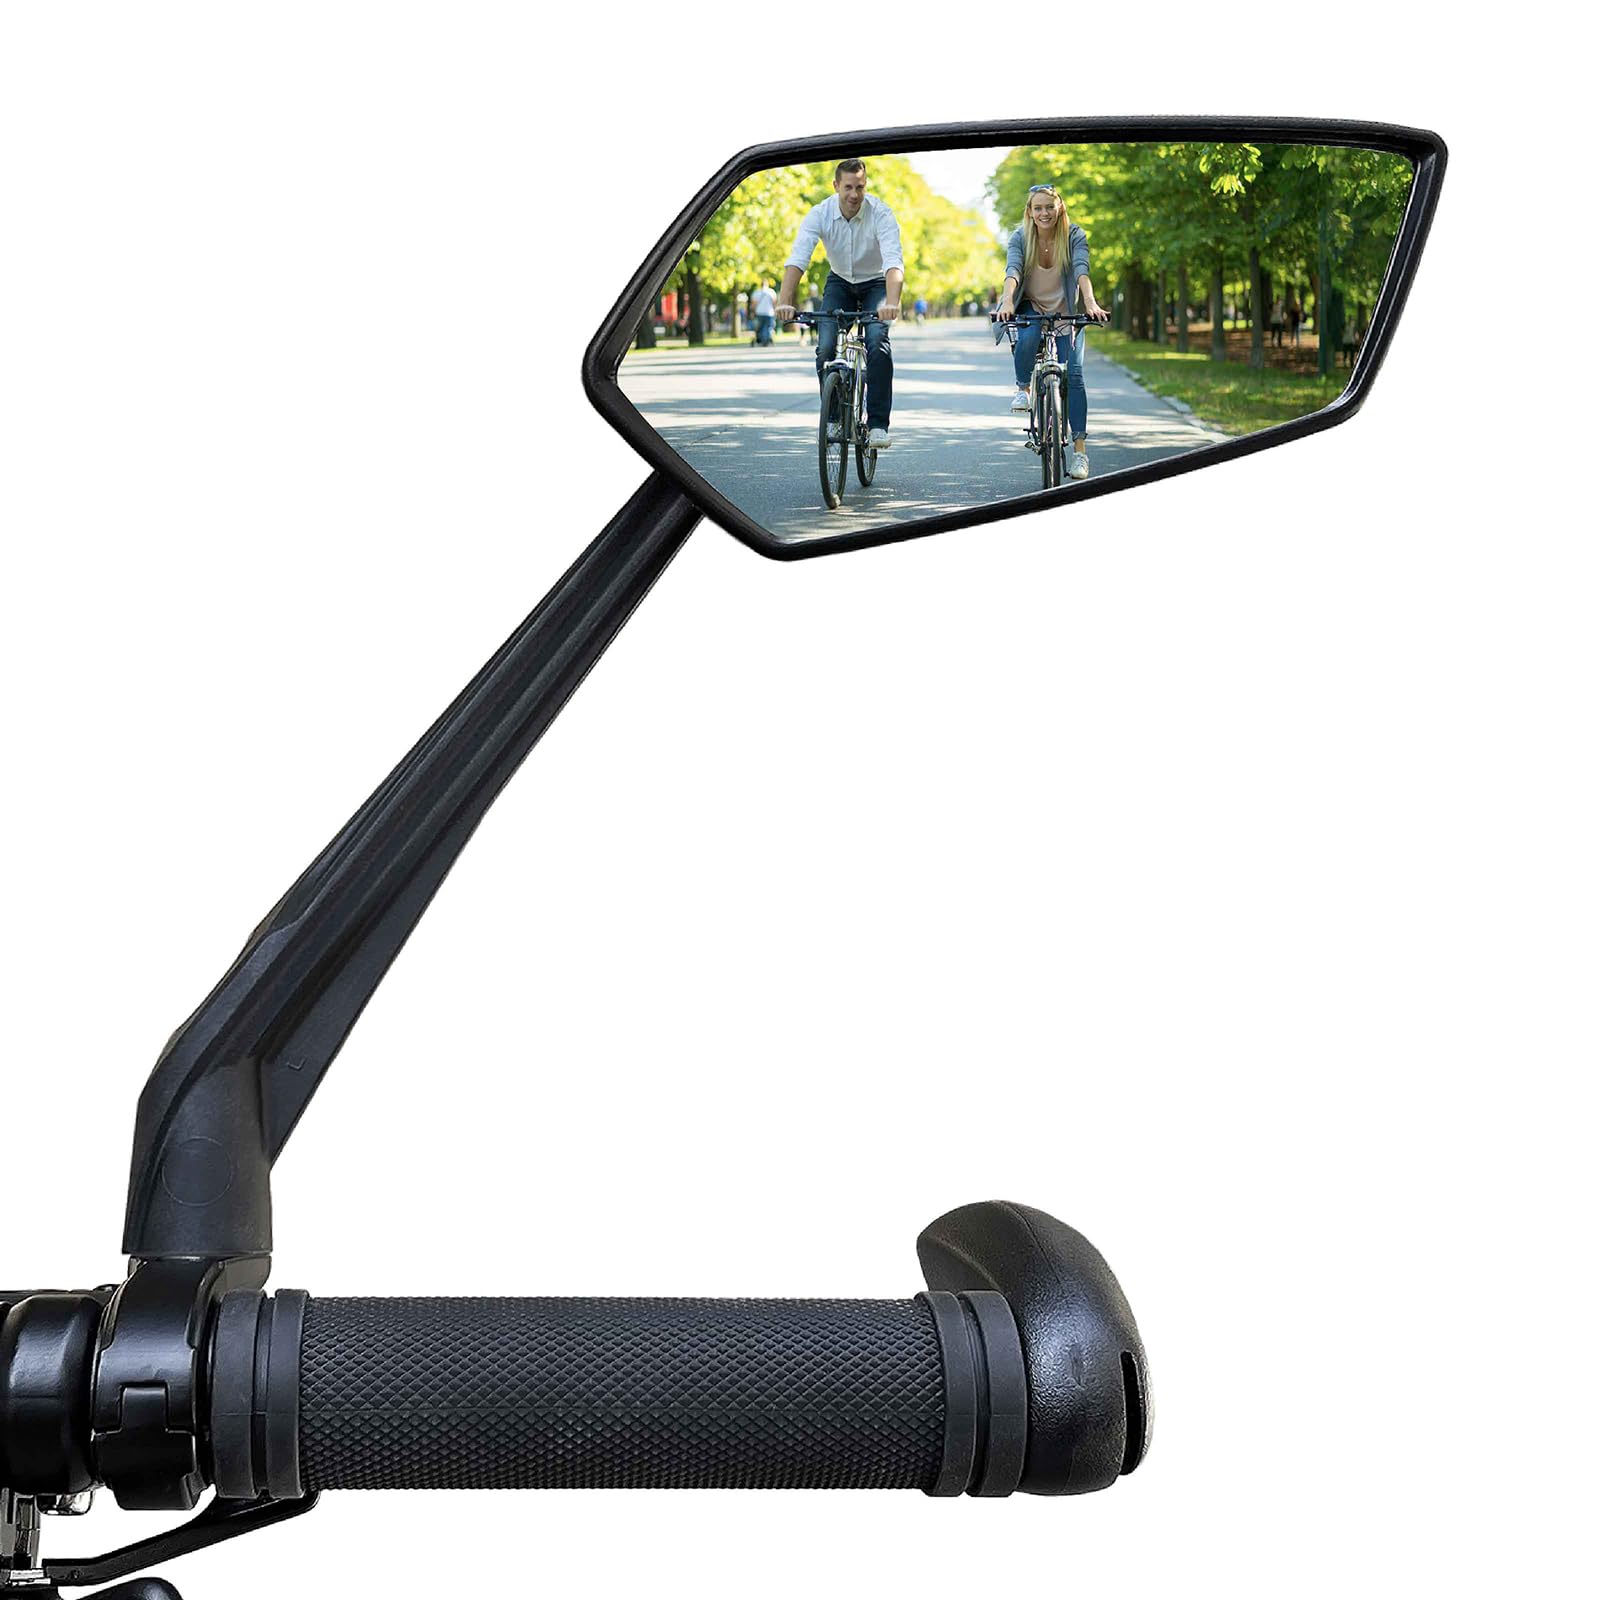 Homieway Fahrradspiegel für E-bike Rechts,Fahrrad Rückspiegel Extra große Spiegelfläche,HD Schlagfestes Echtglas Fahrradrückspiegel,360° Verstellbarer Fahrrad Spiegel für E-Bike Lenker(22-25mm) von Homieway